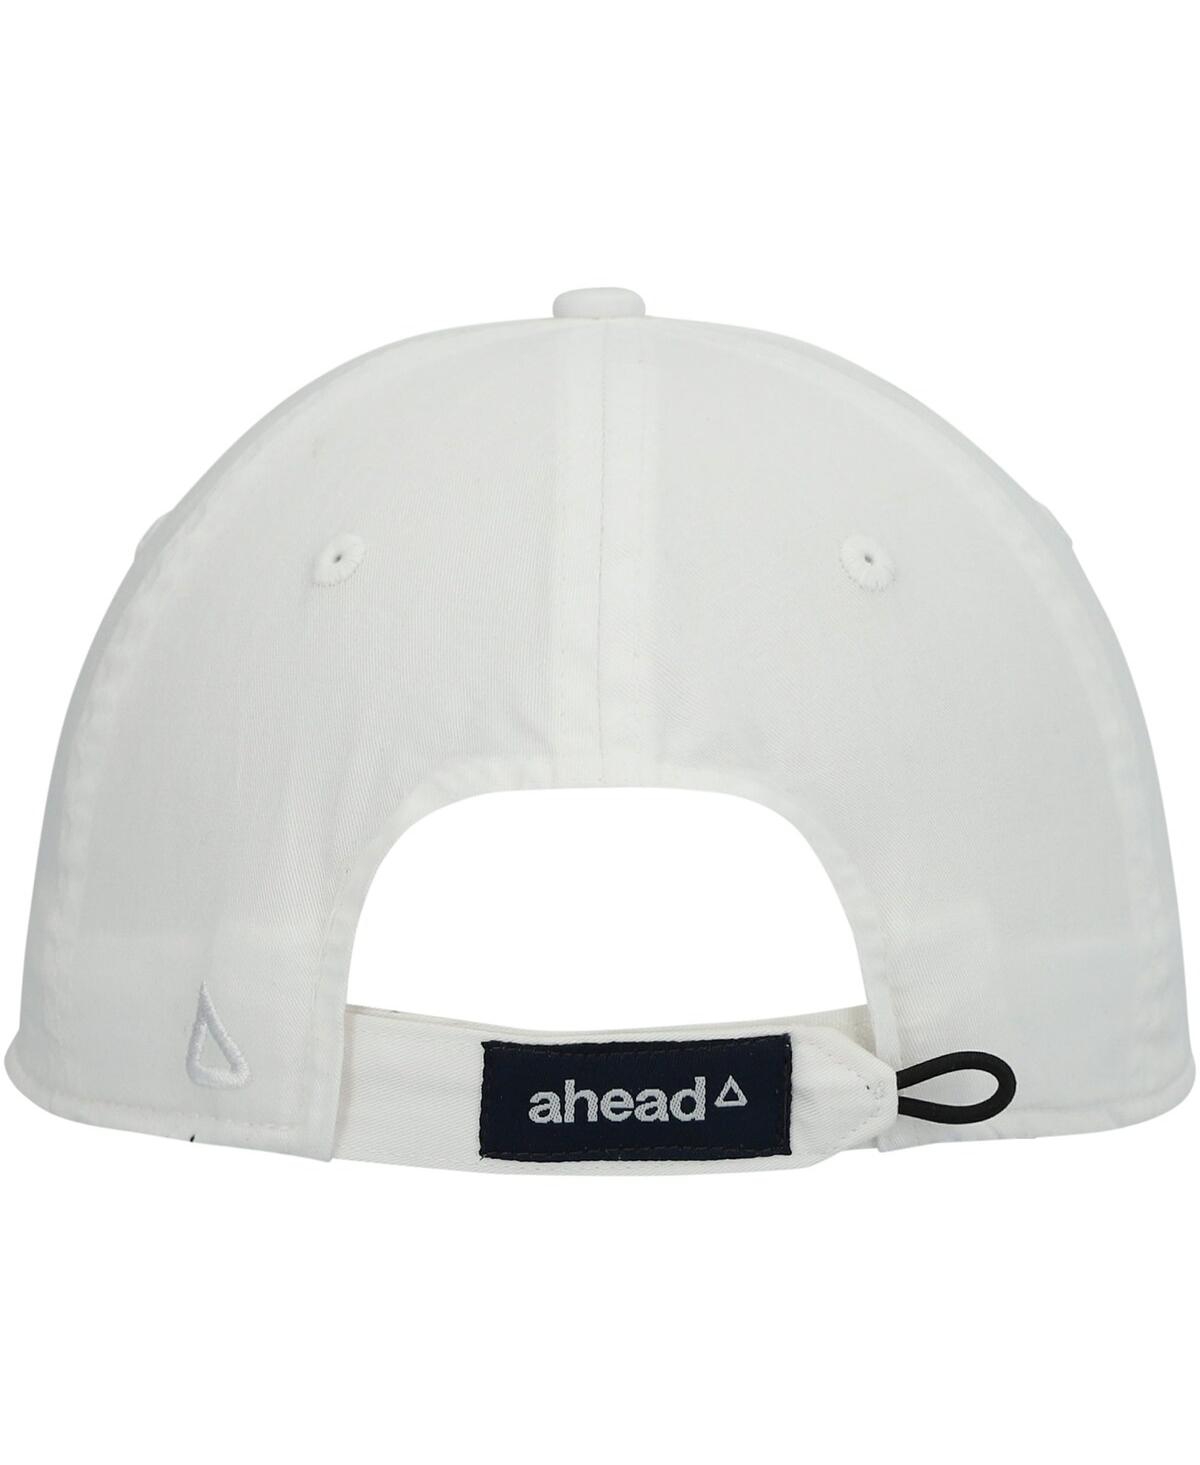 Shop Ahead Men's  White Farmers Insurance Open Shawmut Adjustable Hat